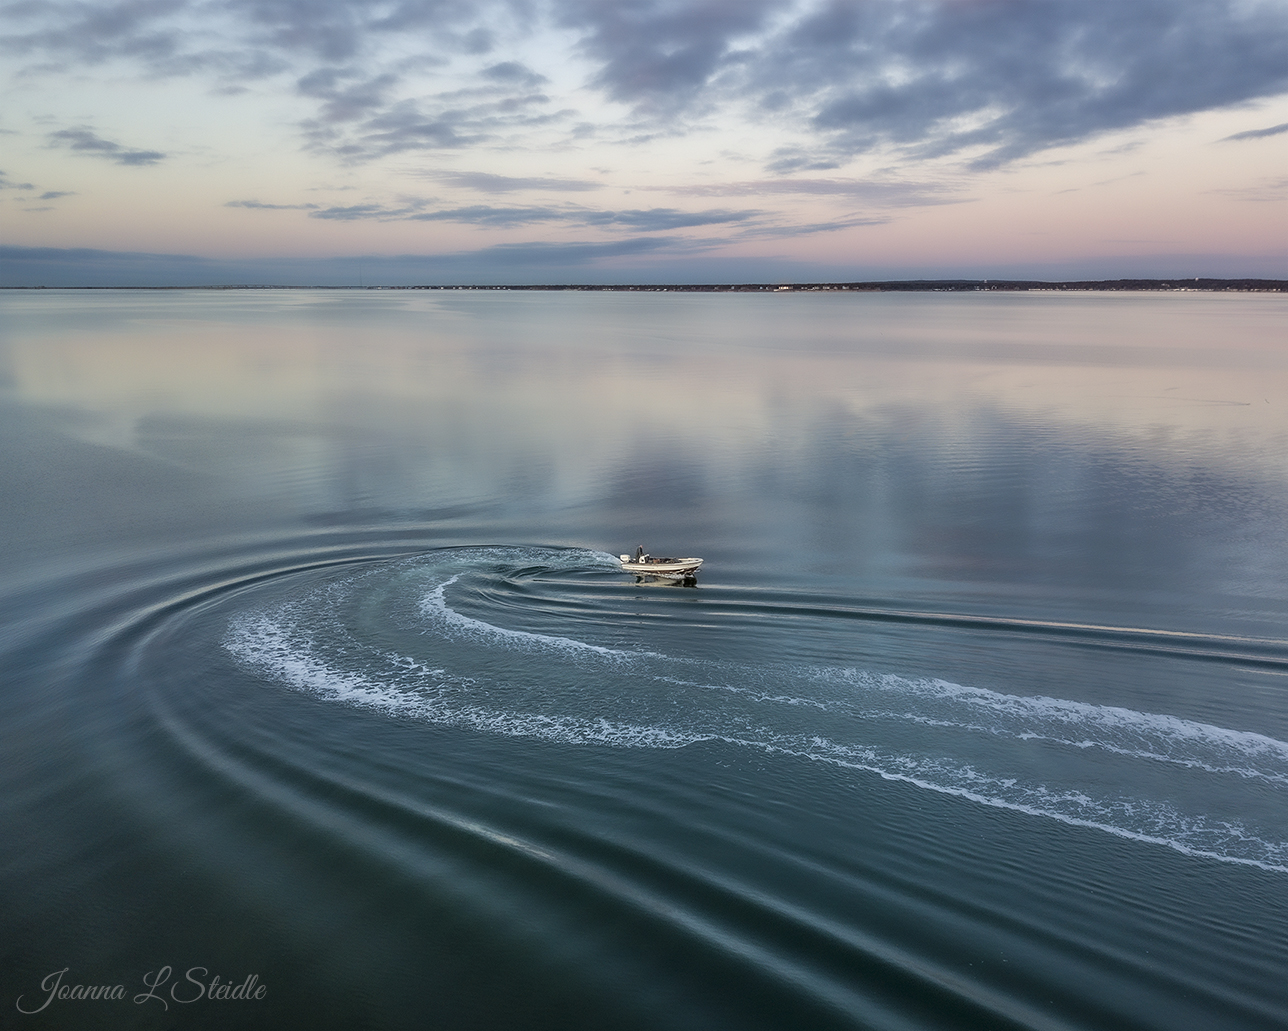 Local clammer on Shinnecock Bay, Southampton, NY by Joanna L Steidle @HamptonsDrone